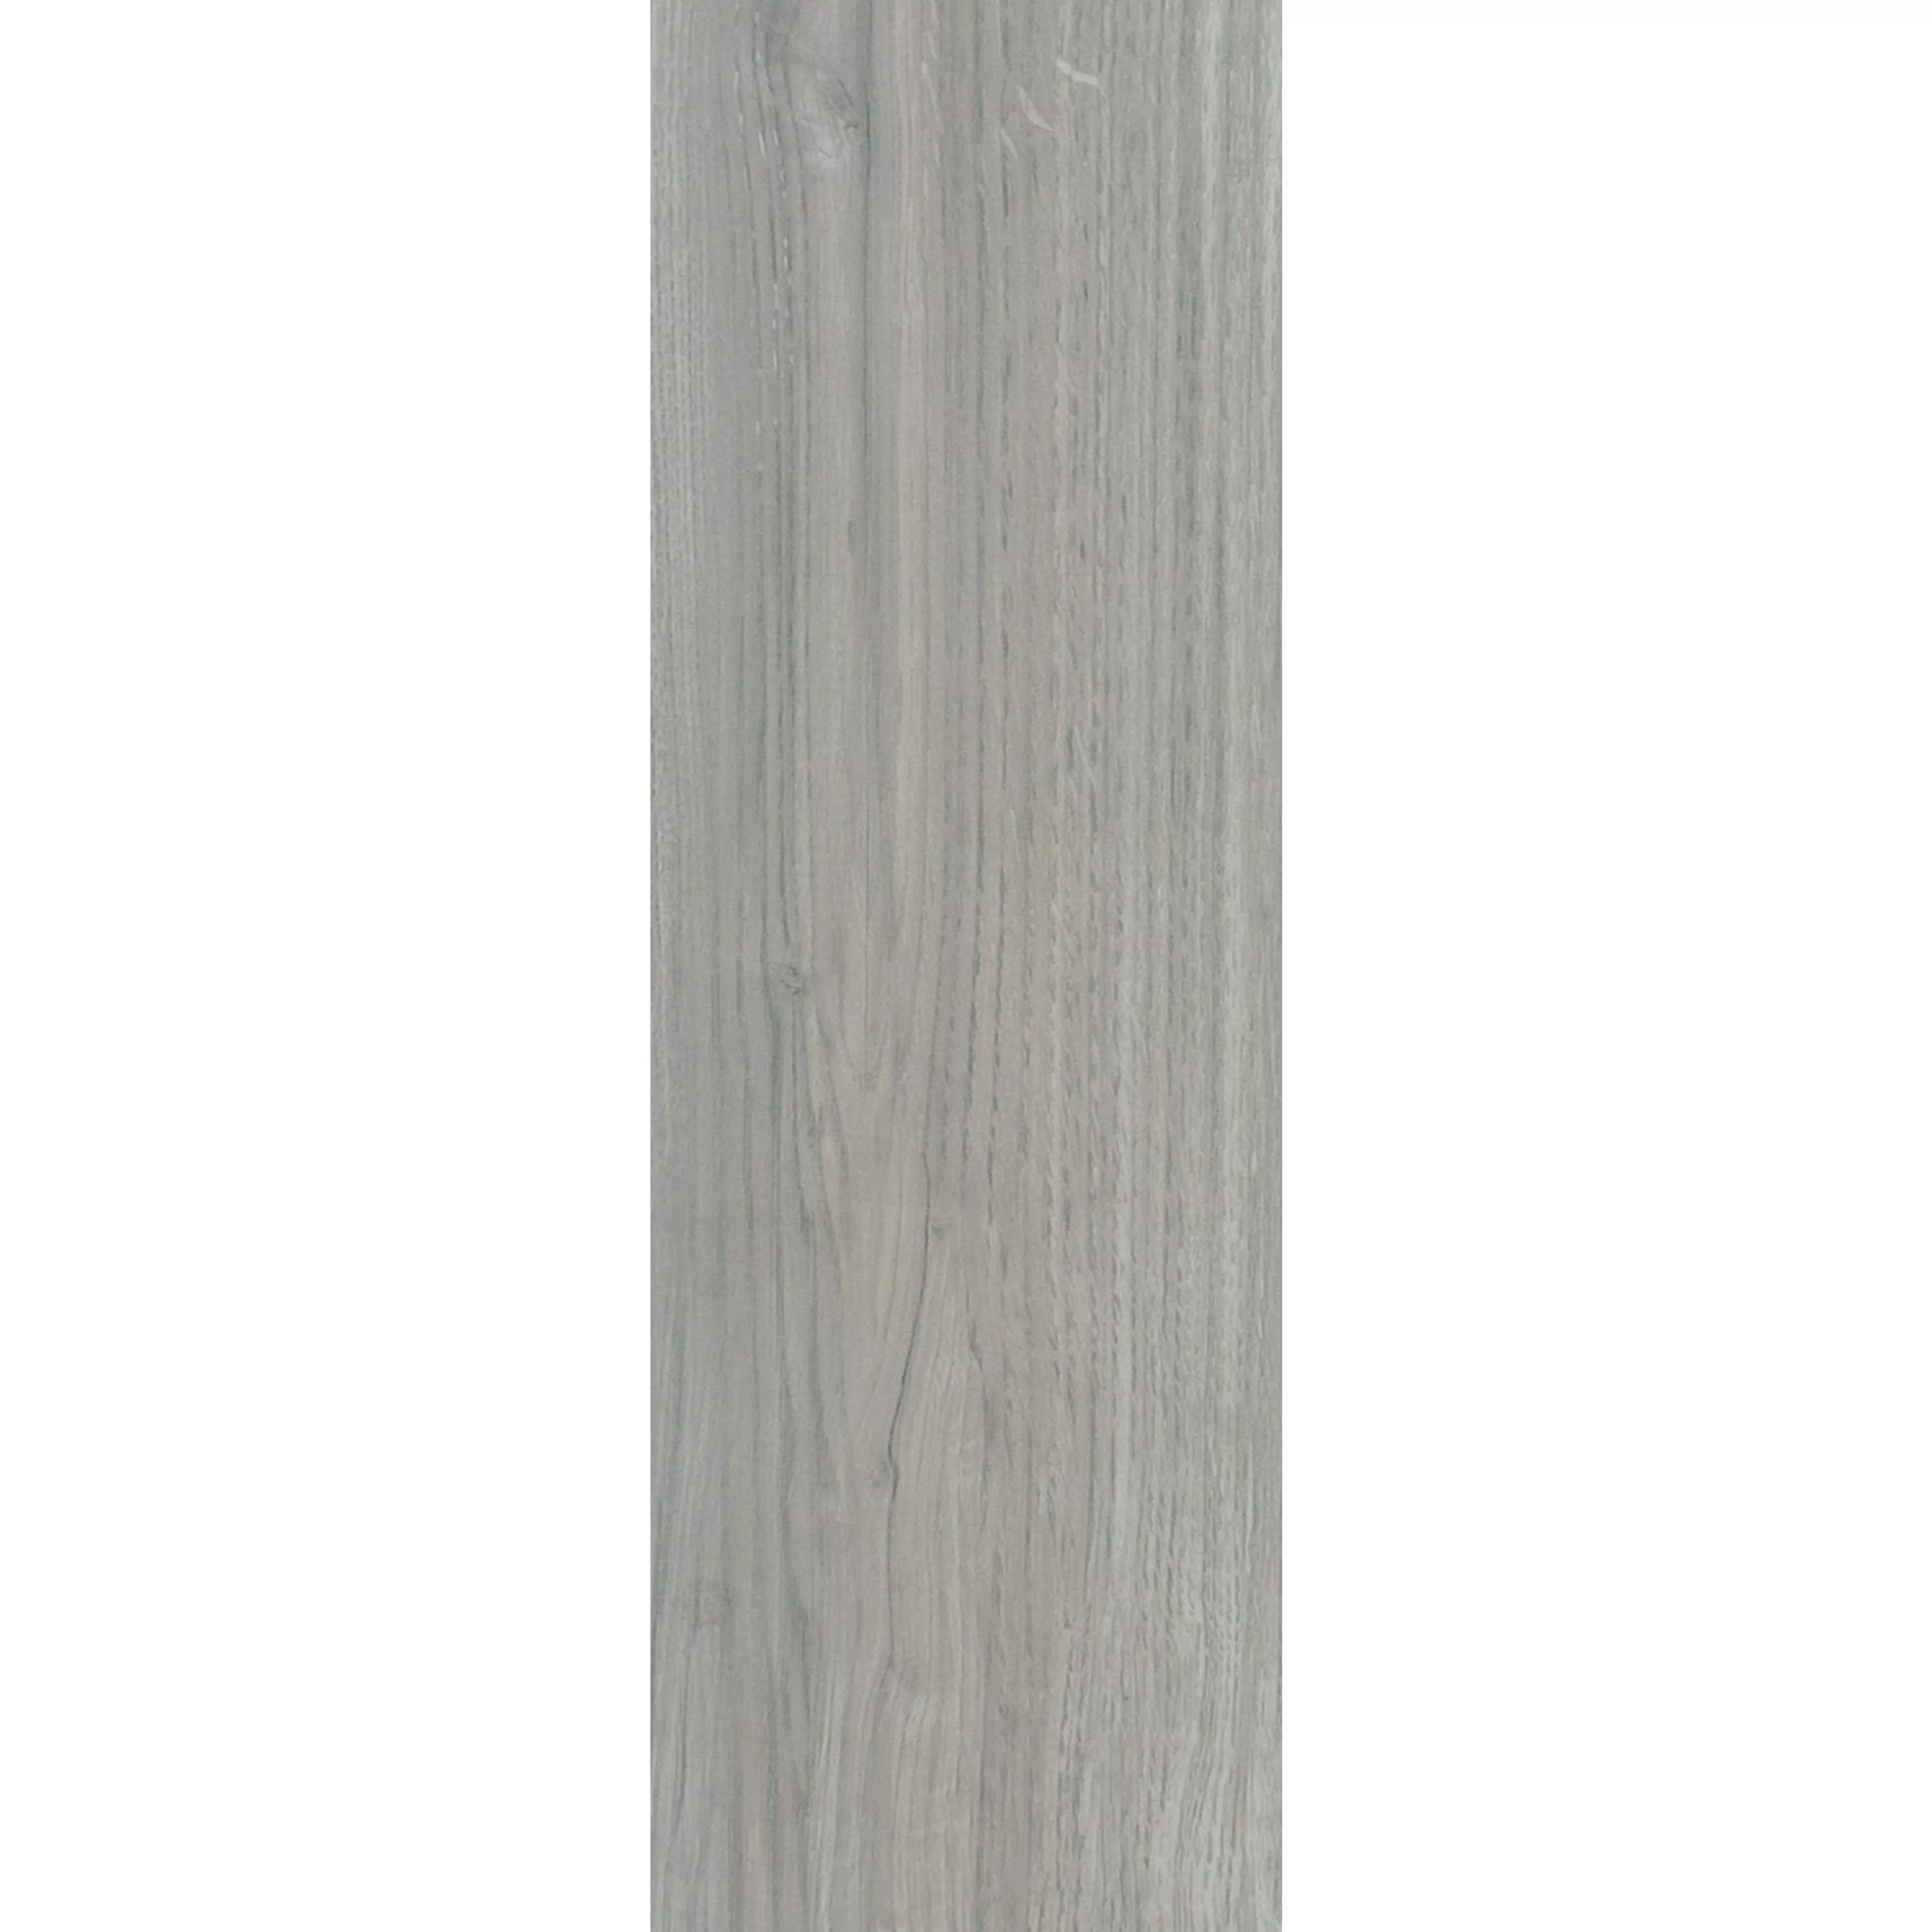 Vloertegels Houtlook Fullwood Beige 20x120cm 